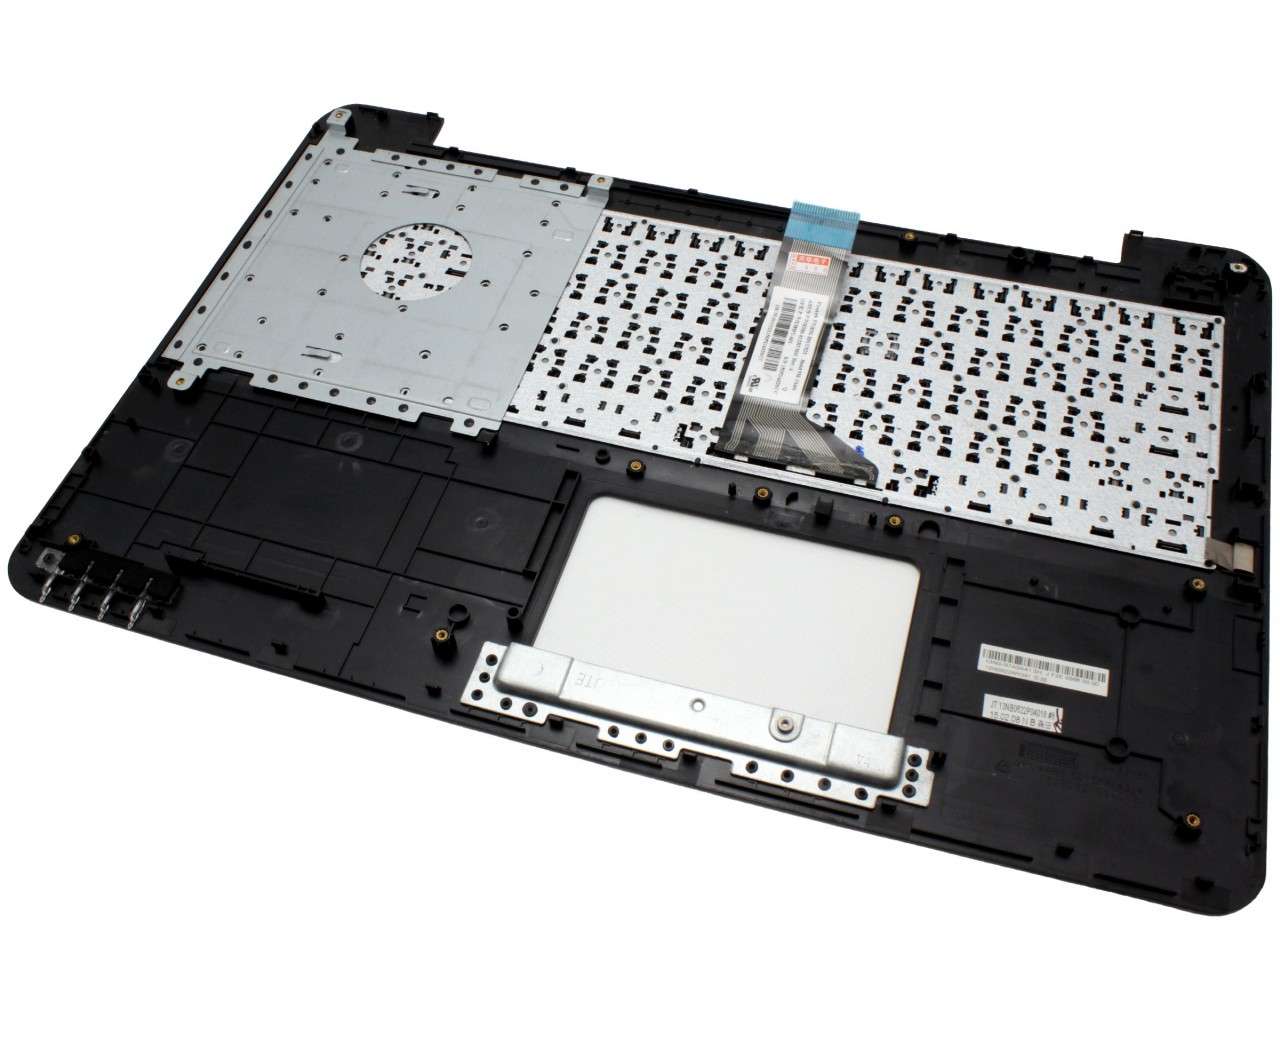 Tastatura Asus K554 Neagra cu Palmrest argintiu